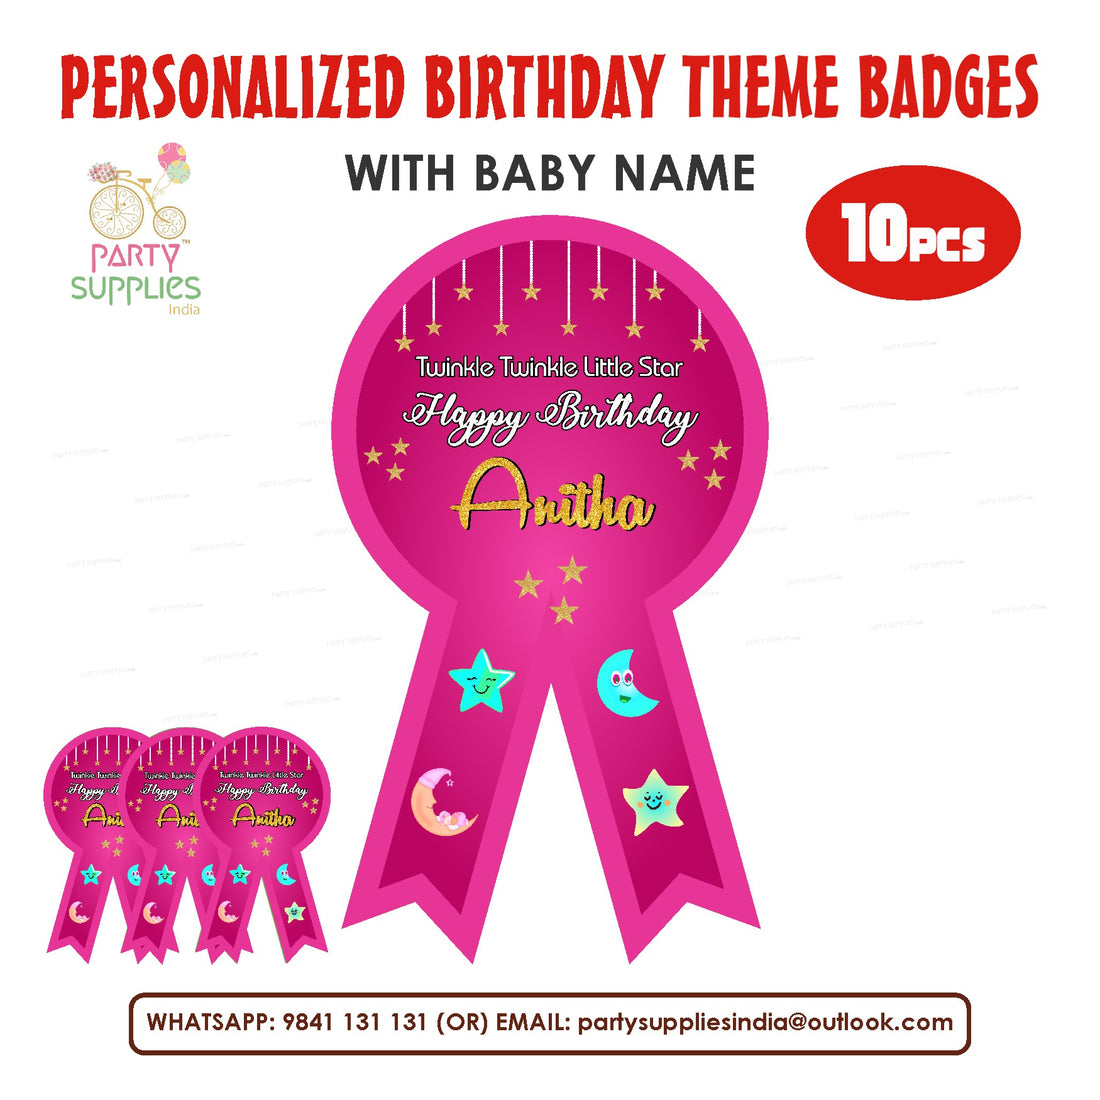 PSI Twinkle Twinkle Little Star Girl Theme Badges